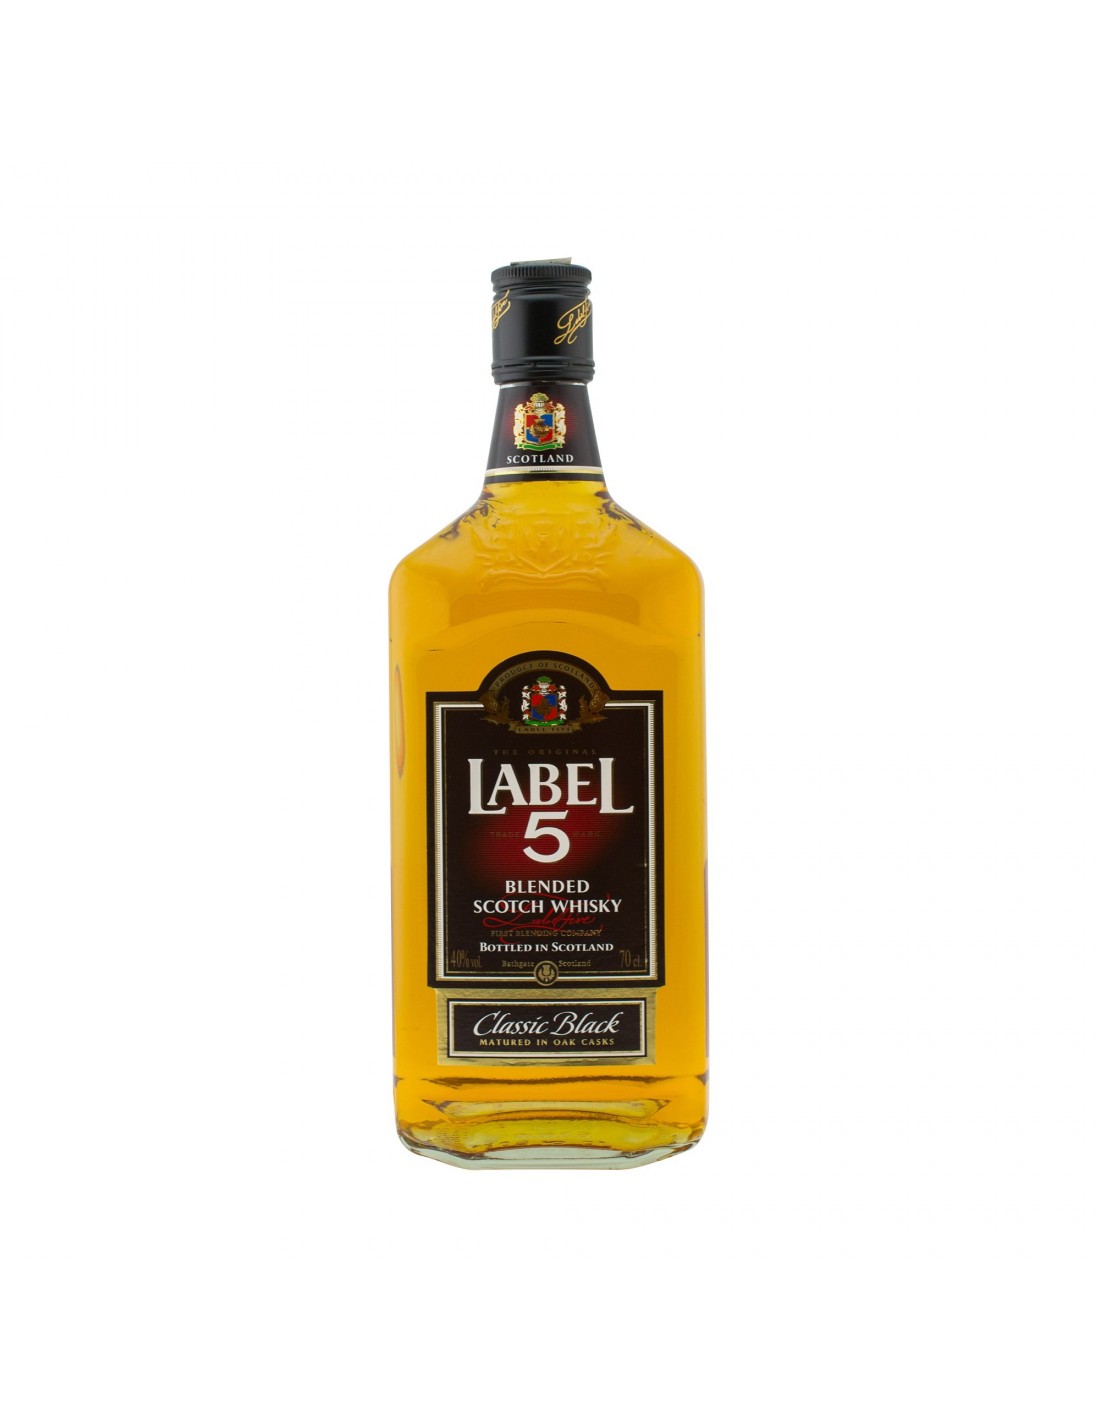 Whisky Label 5, 0.7L, 40% alc., Scotia alcooldiscount.ro